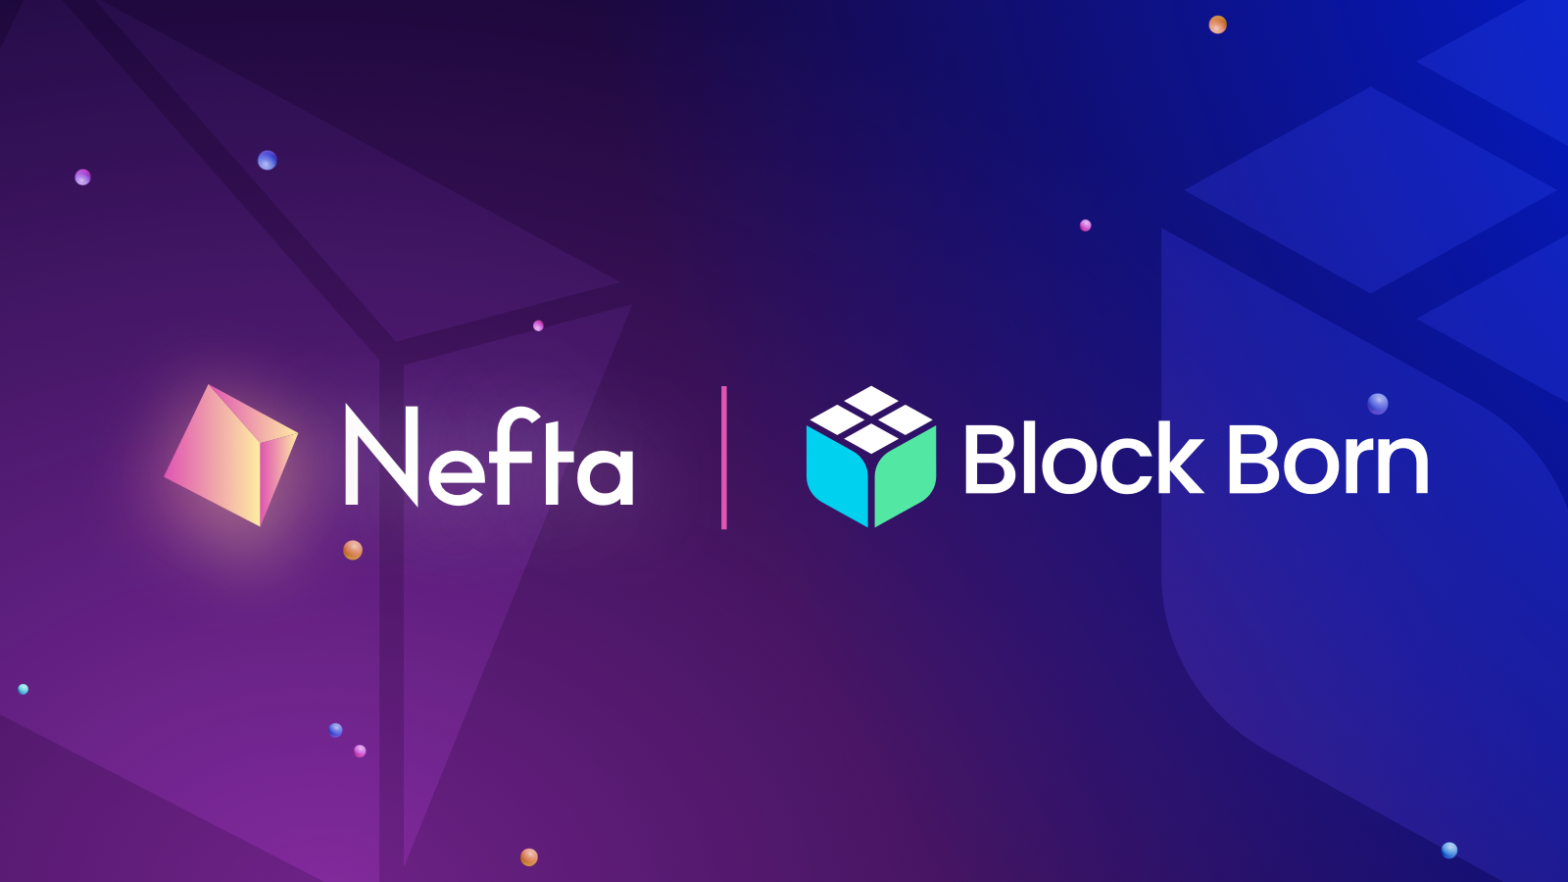 Nefta and Block Born collaborate to work on Tezos blockchain